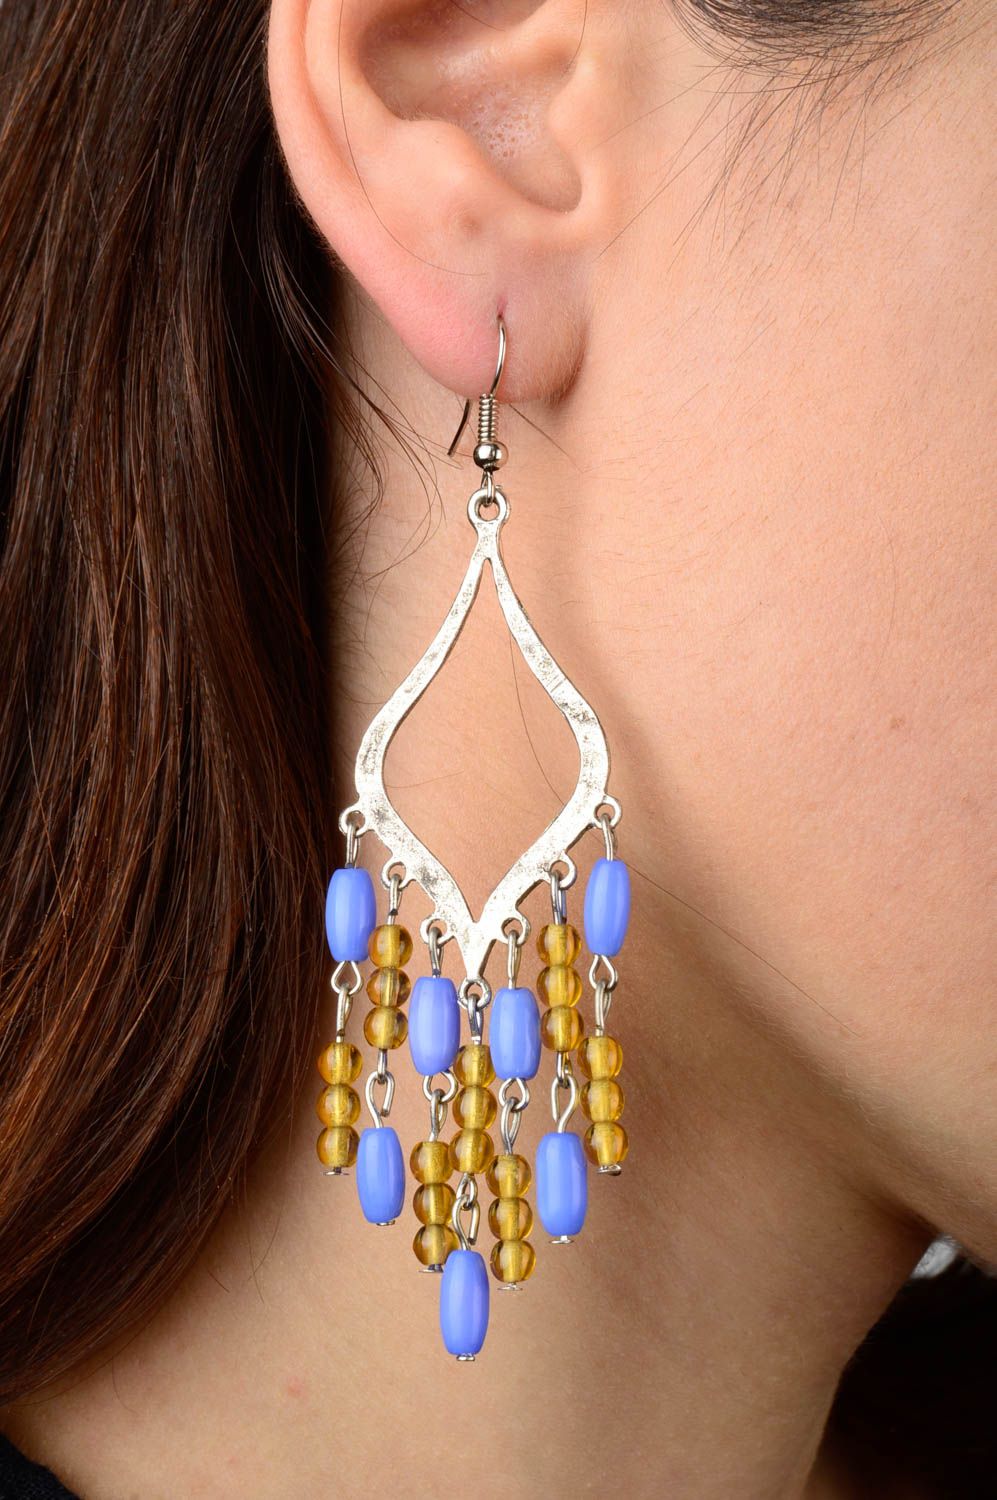 Handmade earrings designer jewelry unusual accessory gift ideas beads earrings photo 2